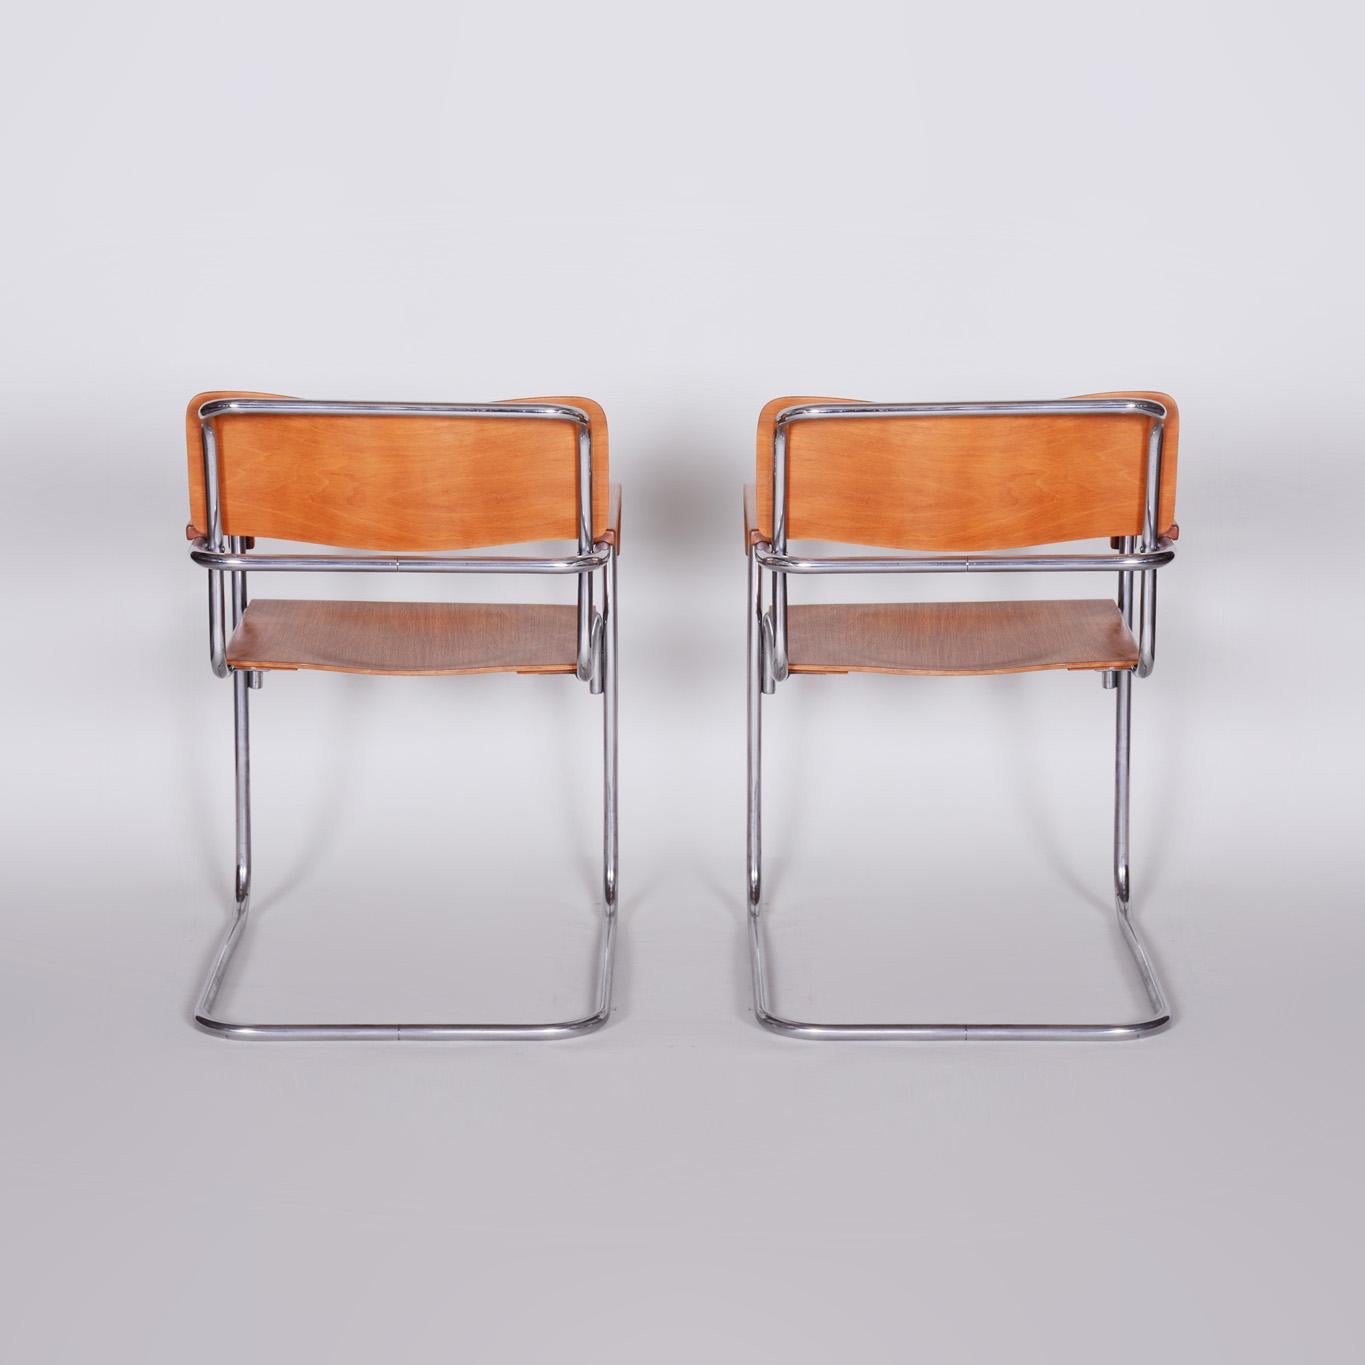 Pair of Mucke Melder Bauhaus Armchairs Made in 1930s Czechia, Restored For Sale 2